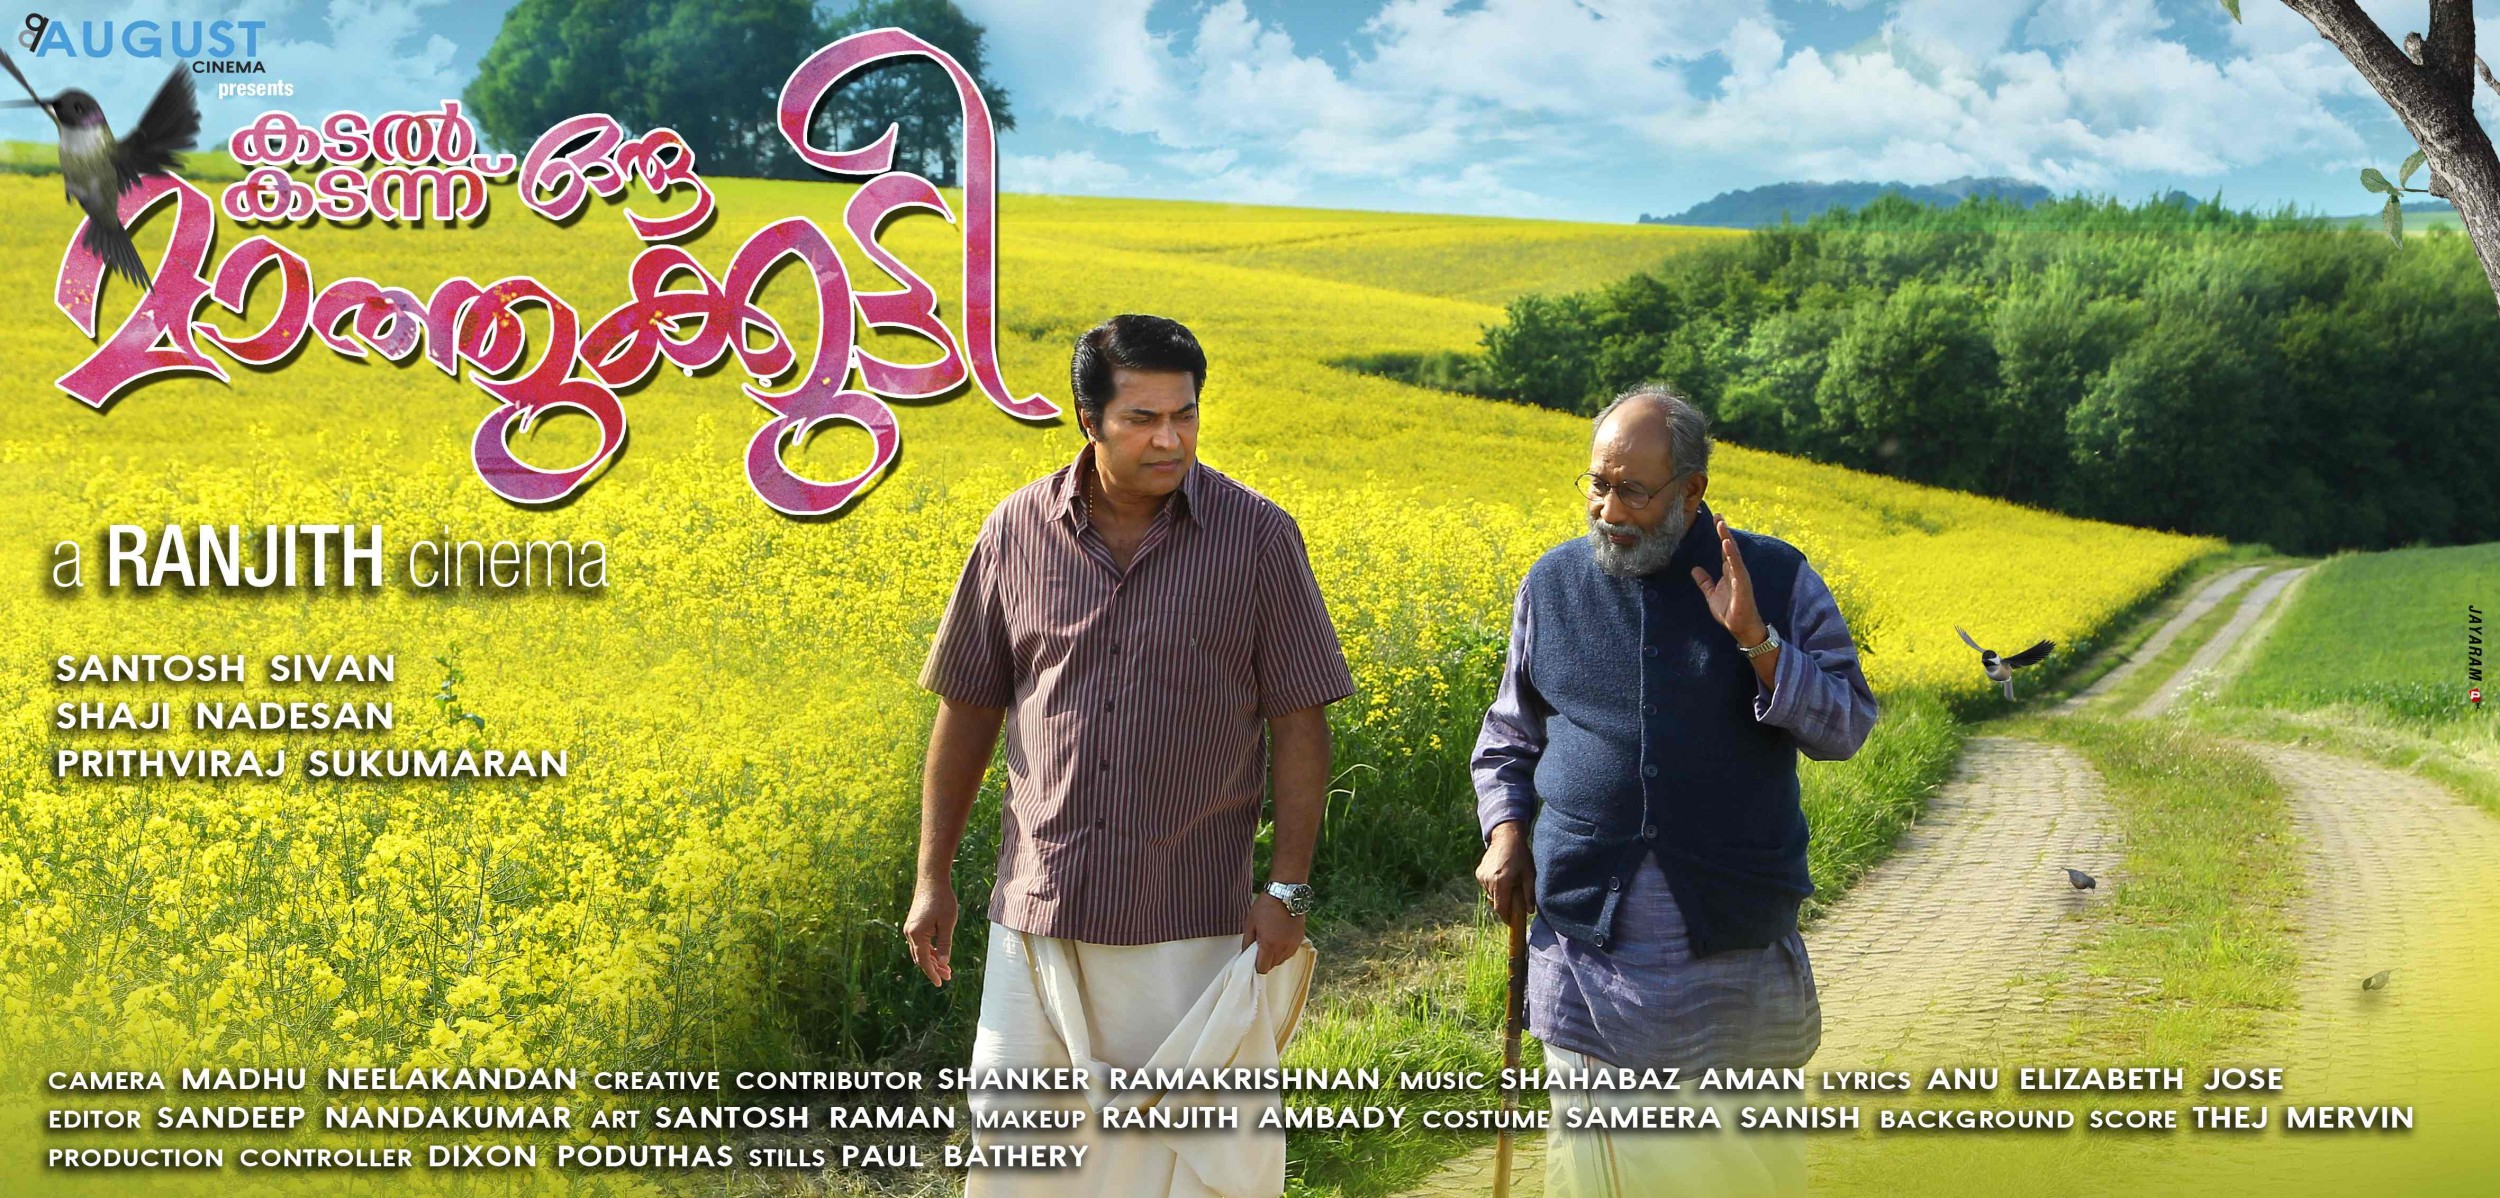 Mega Sized Movie Poster Image for Kadal Kadannu Oru Mathukutty (#7 of 11)